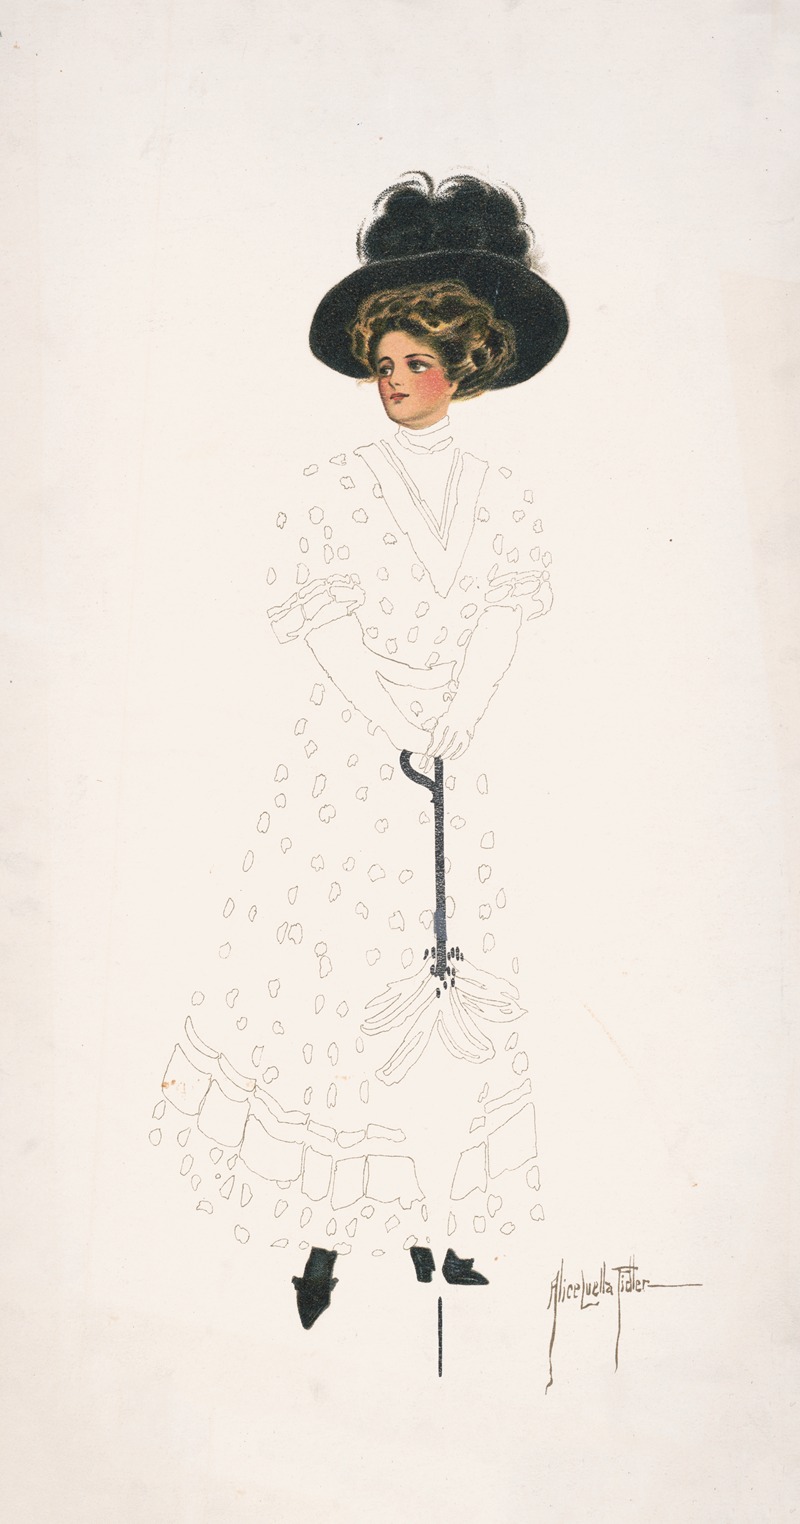 Alice Luella Fidler - Woman with hat and umbrella